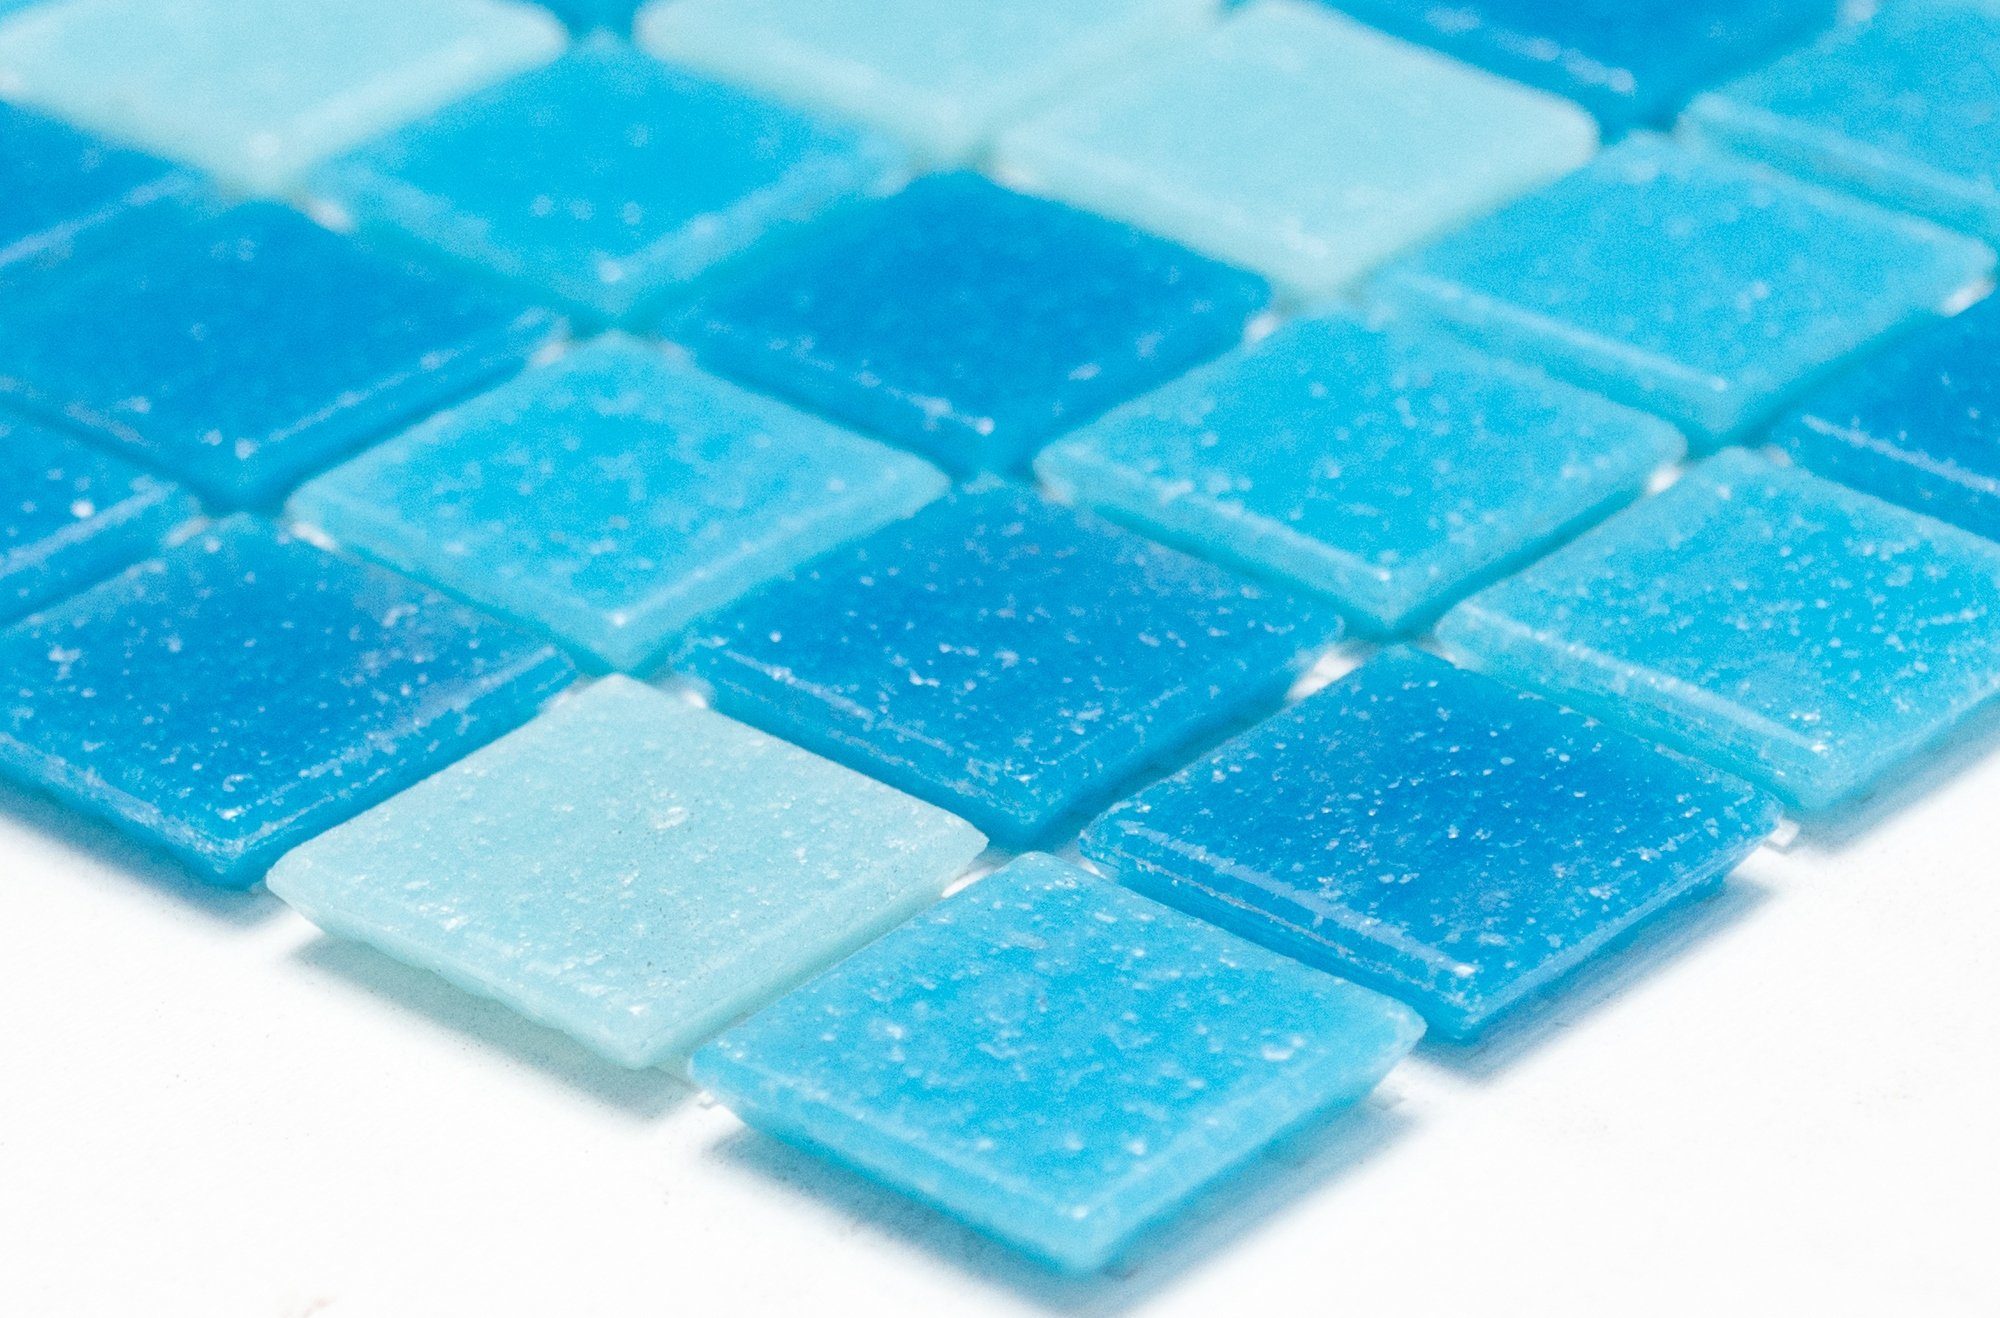 / blau Mosani Matten mix Bodenfliese 10 Mosaikfliesen Glasmosaik matt hellblau